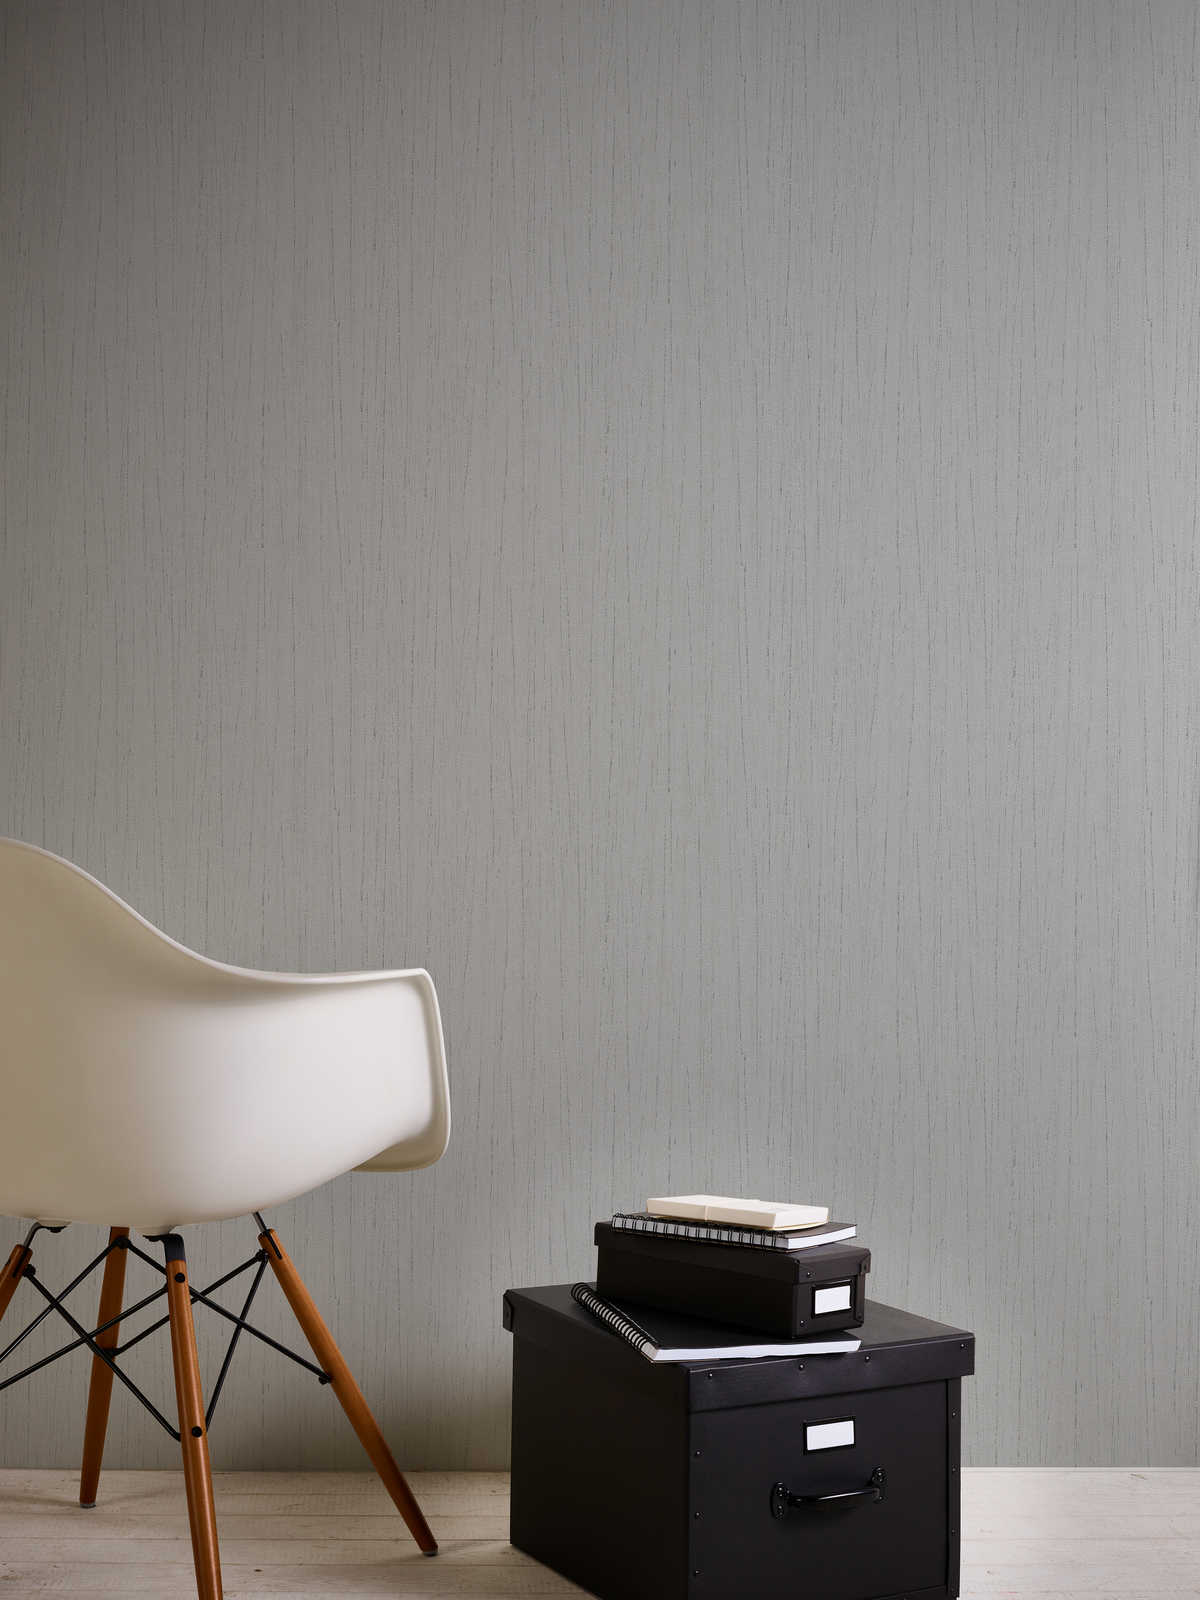             Tapete Taubengrau mit Textur & Farbeffekt – Grau
        